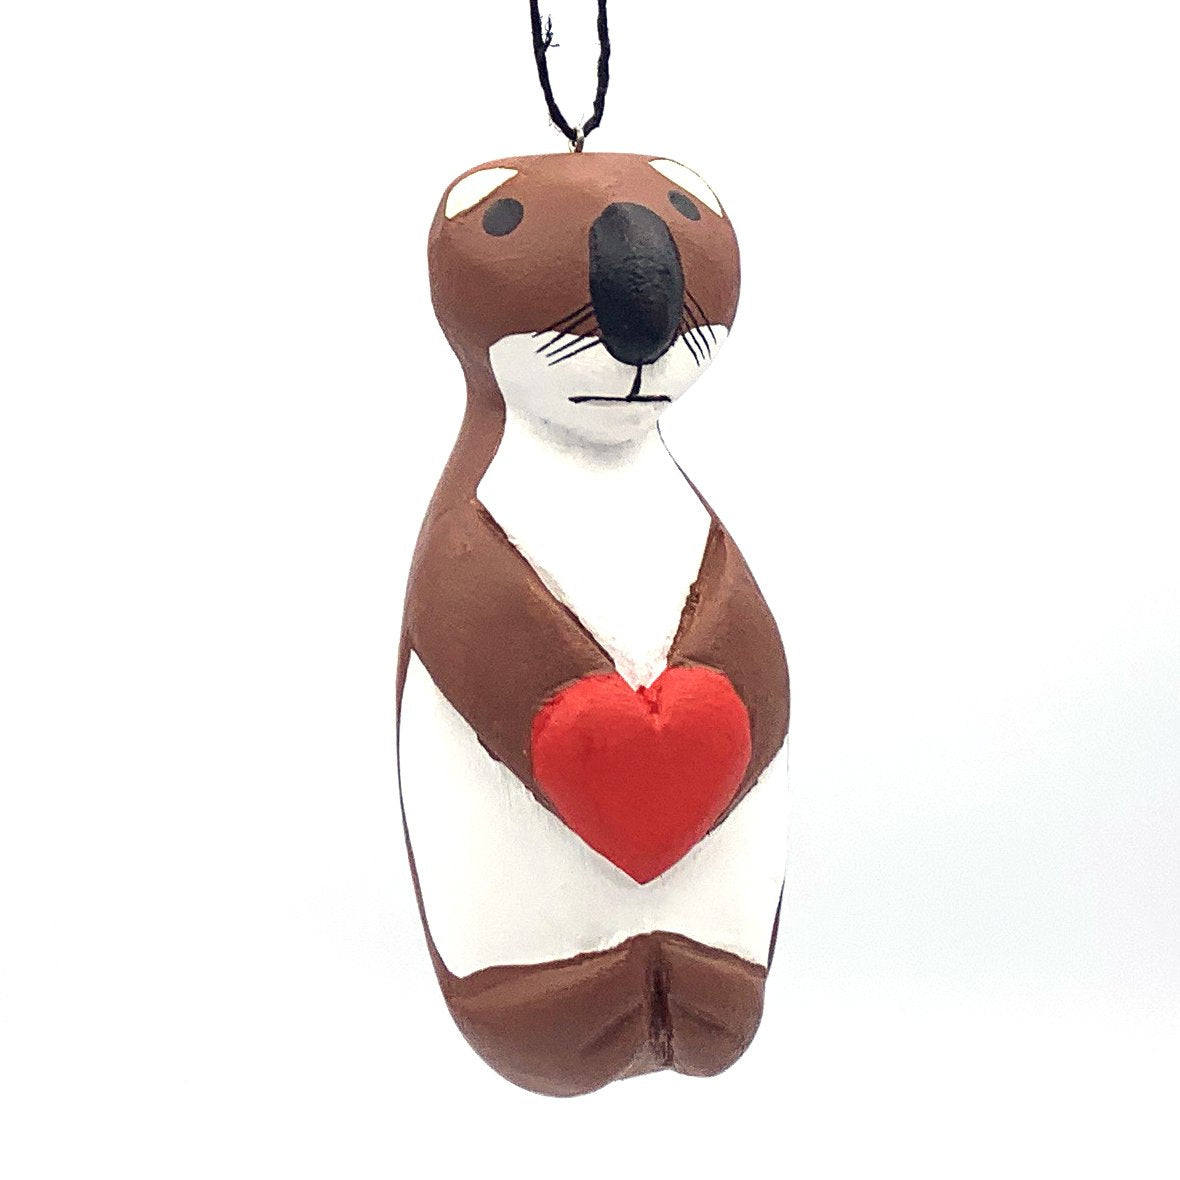 Sea Otter with Heart Balsa Ornament